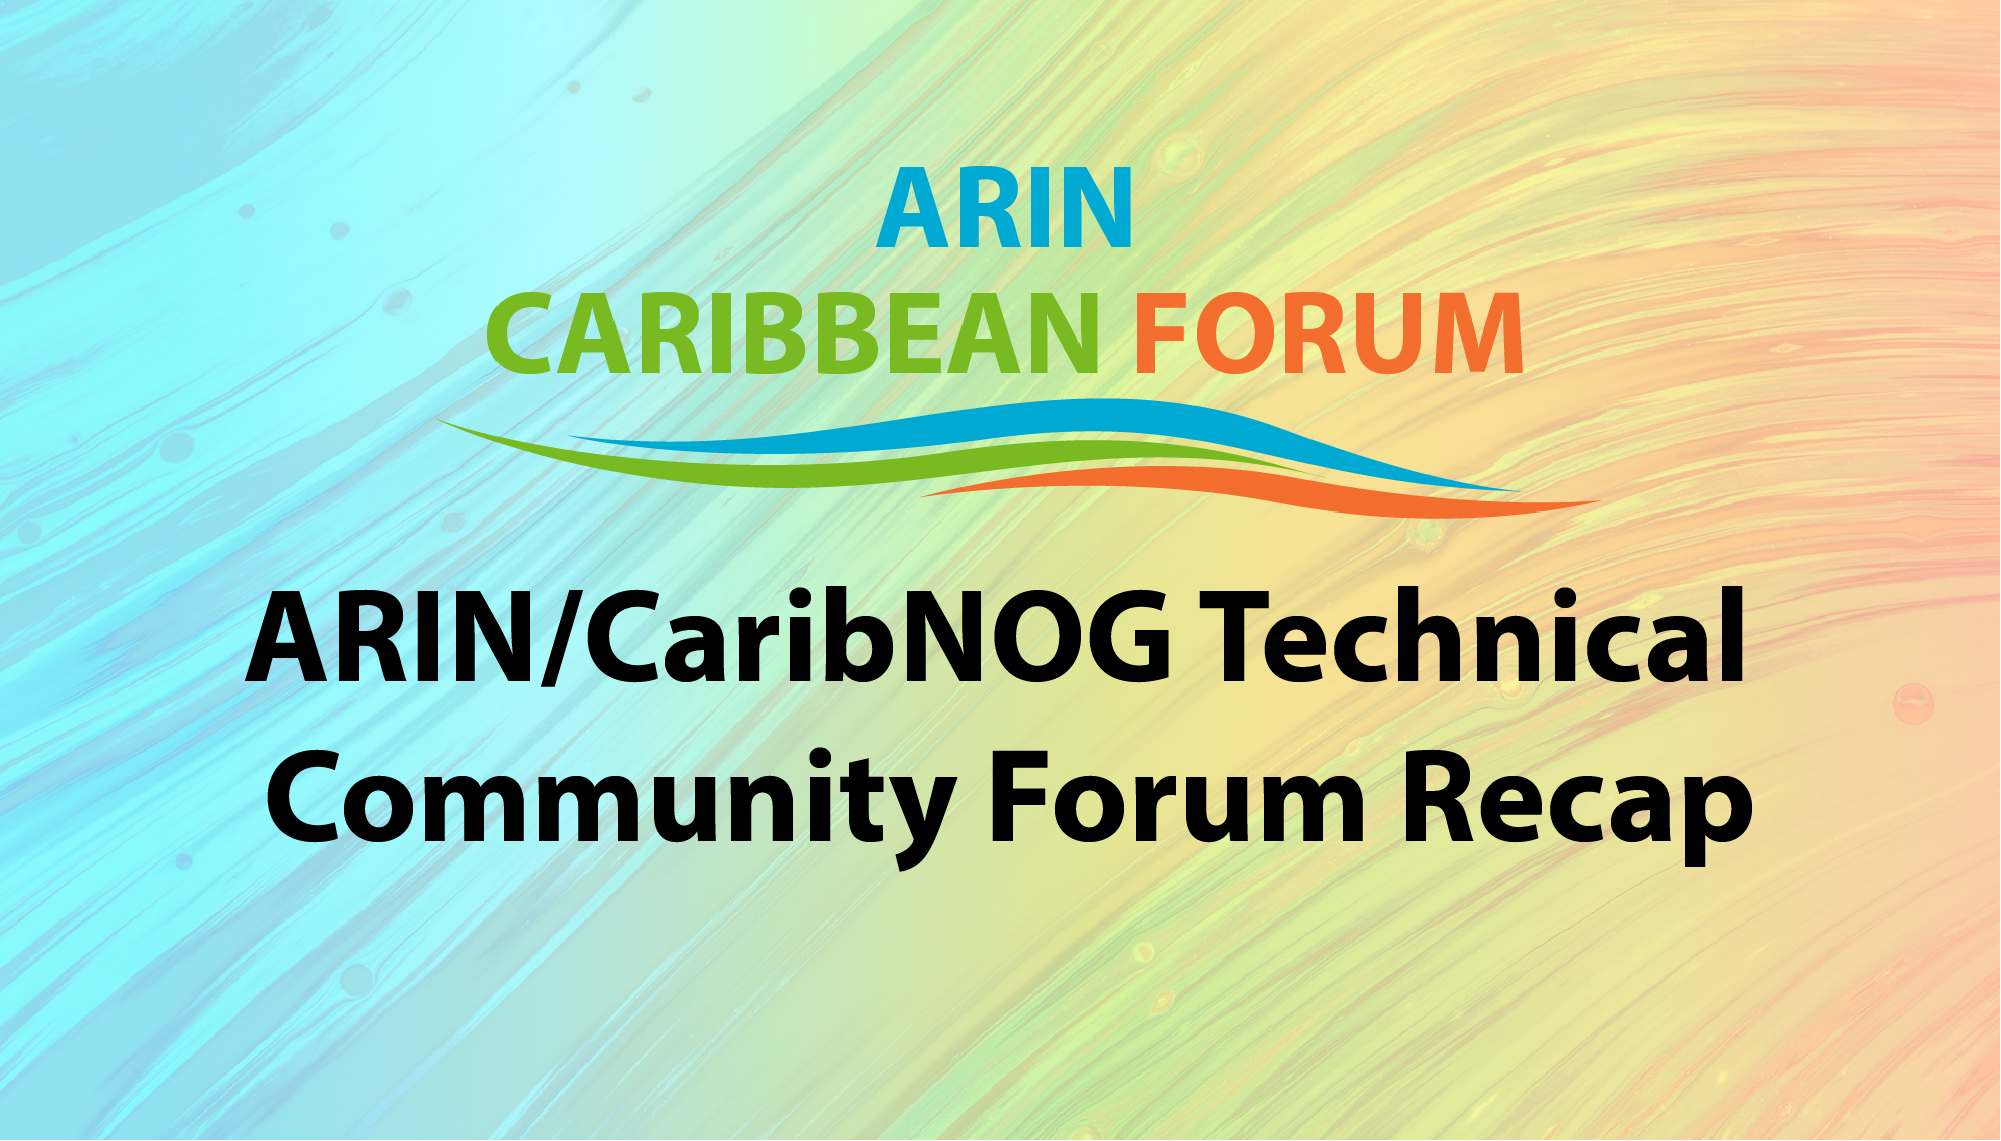 ARIN/CaribNOG Technical Community Forum Recap